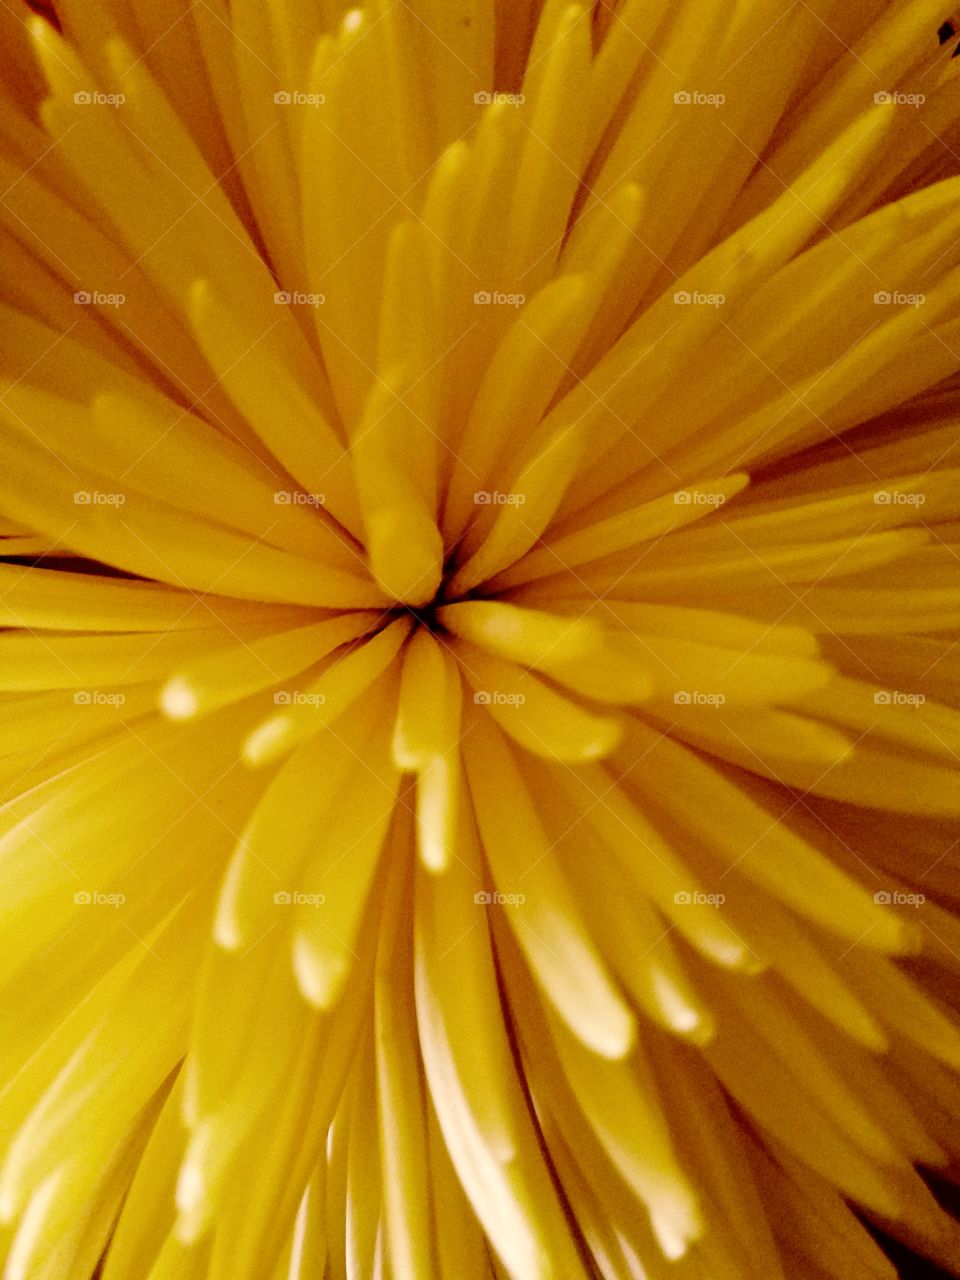 yellow flower closeup